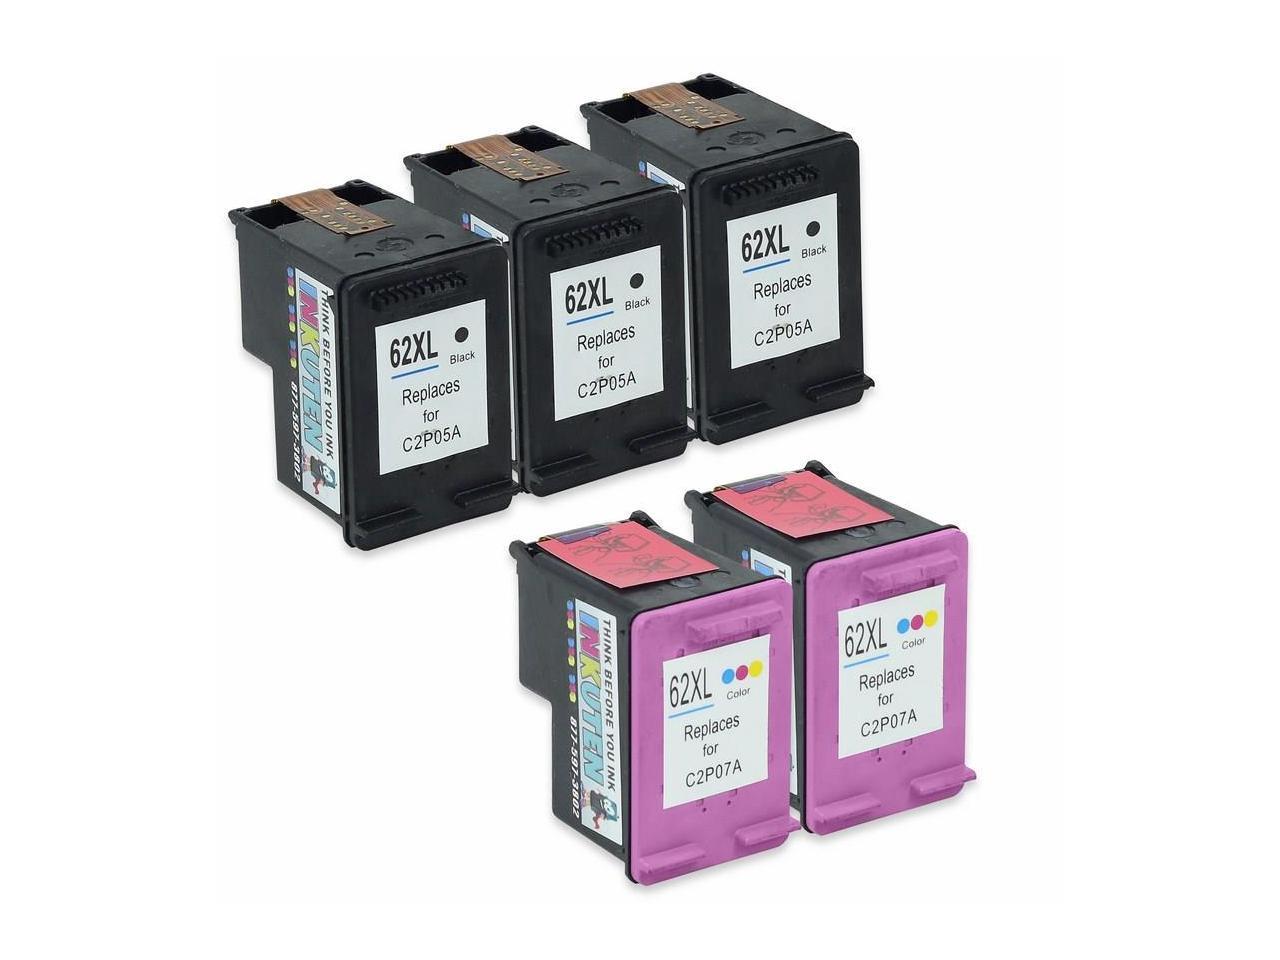 INKUTEN HP Envy 7640 Ink Cartridges (5-Pack High Yield) COMPATIBLE